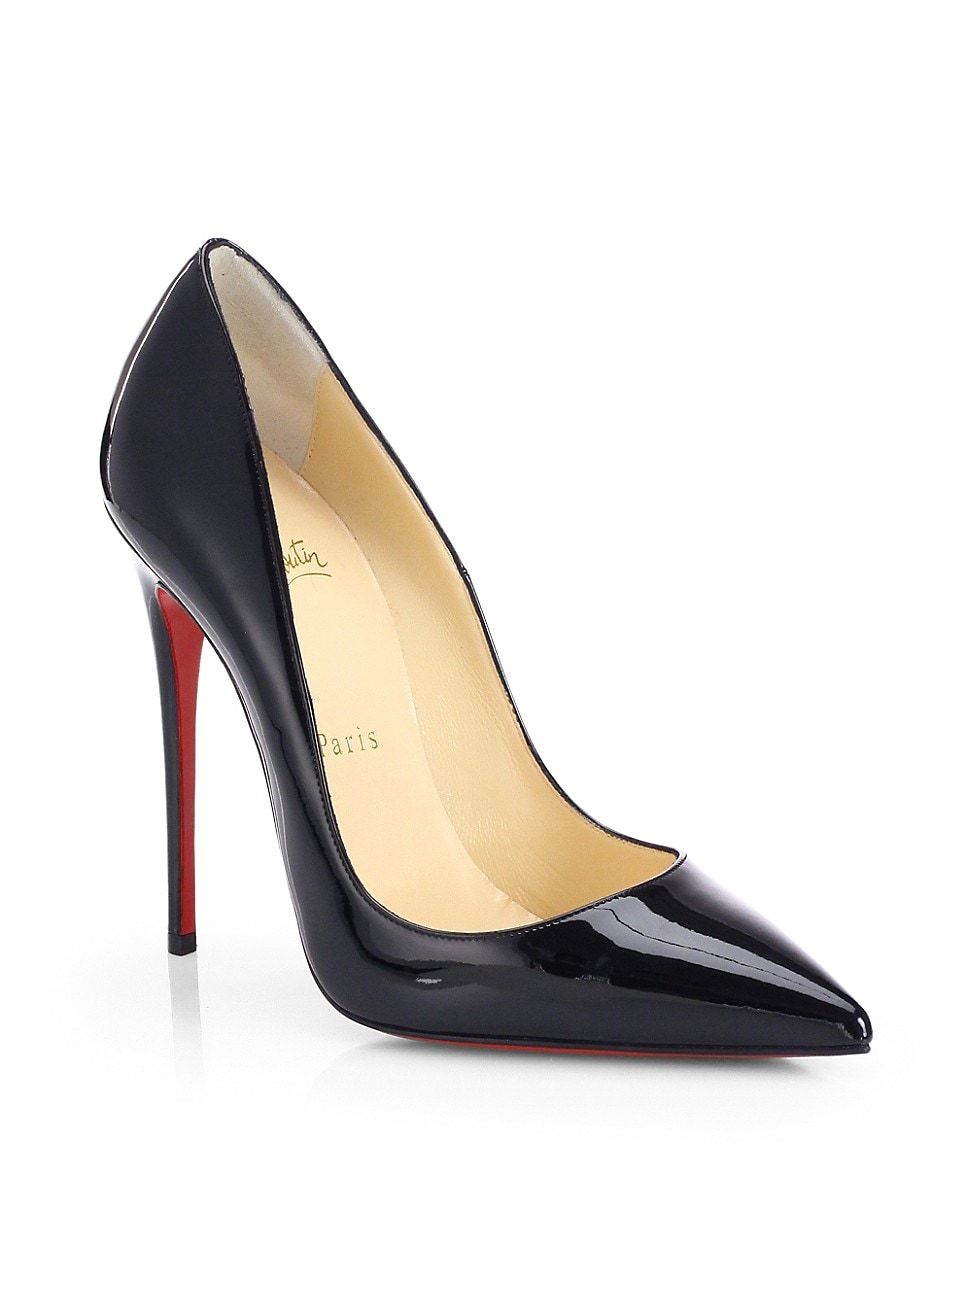 Christian Louboutin Women's So Kate 120 Patent Leather Pumps - Black - Size 36.5 (6.5) | Saks Fifth Avenue